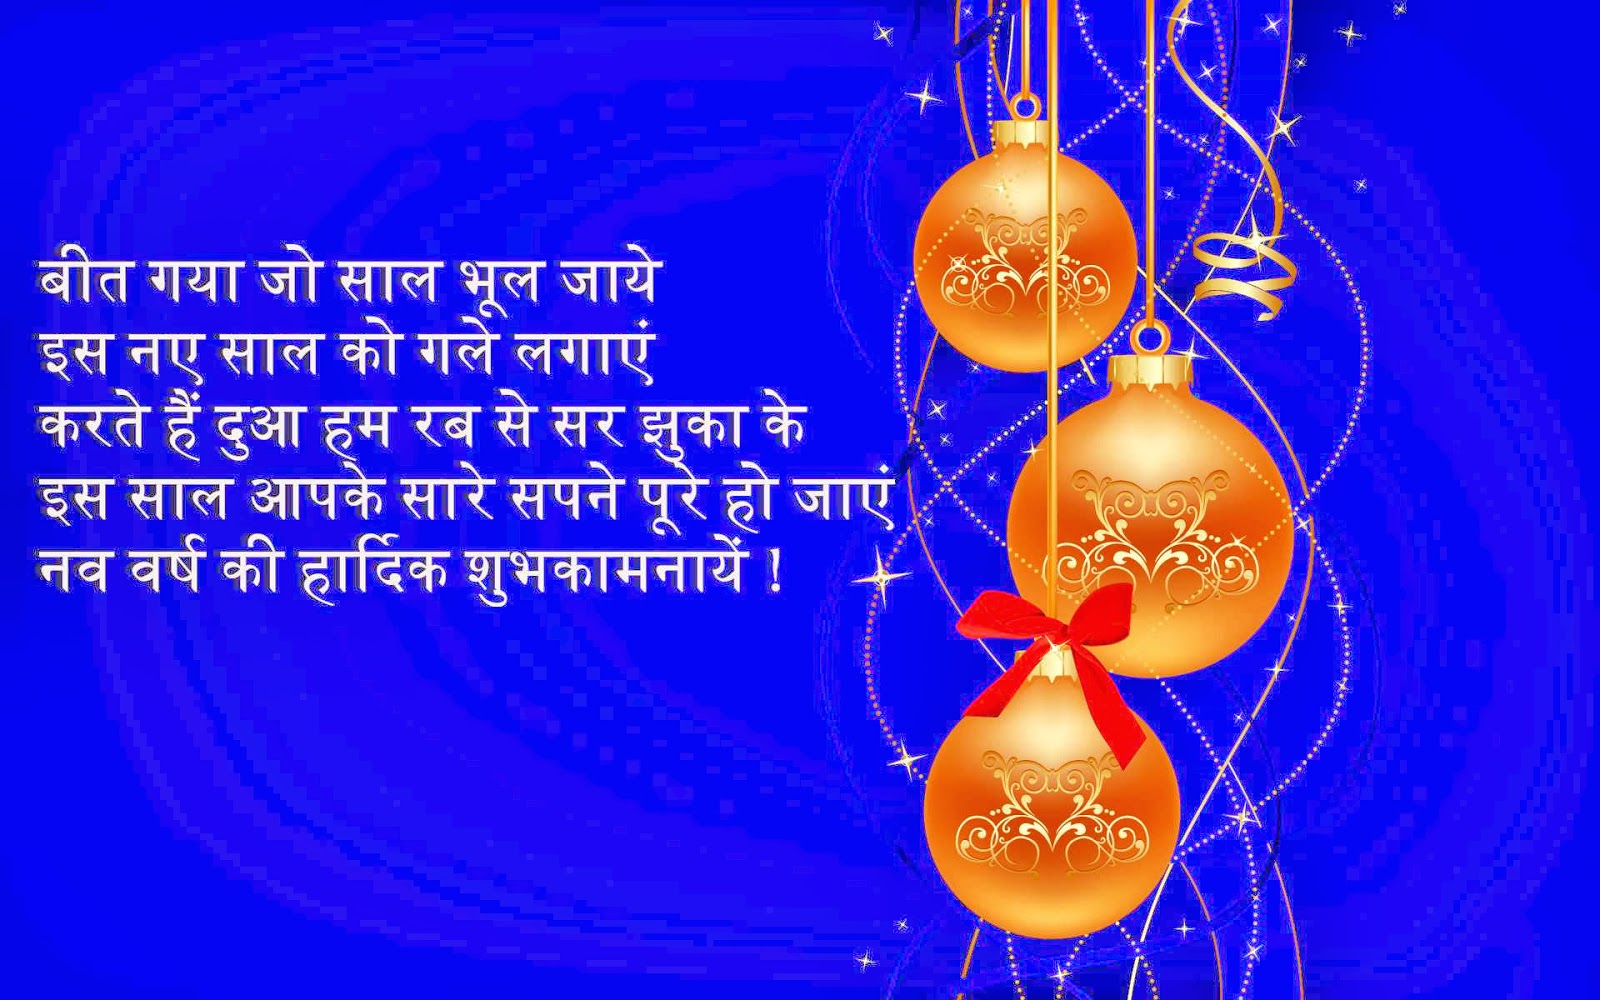 Happy New Year Shayari Wallpaper - New Year Wishes Shayari In Hindi -  1600x1000 Wallpaper 